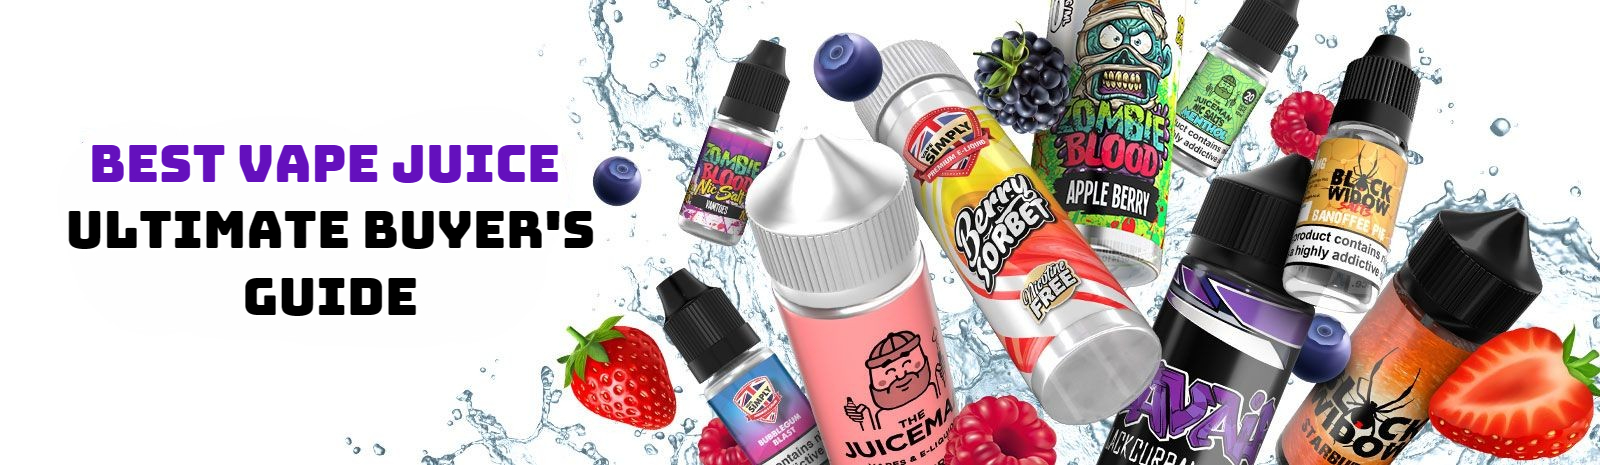 Best Vape Juice : The Ultimate Buyer’s Guide